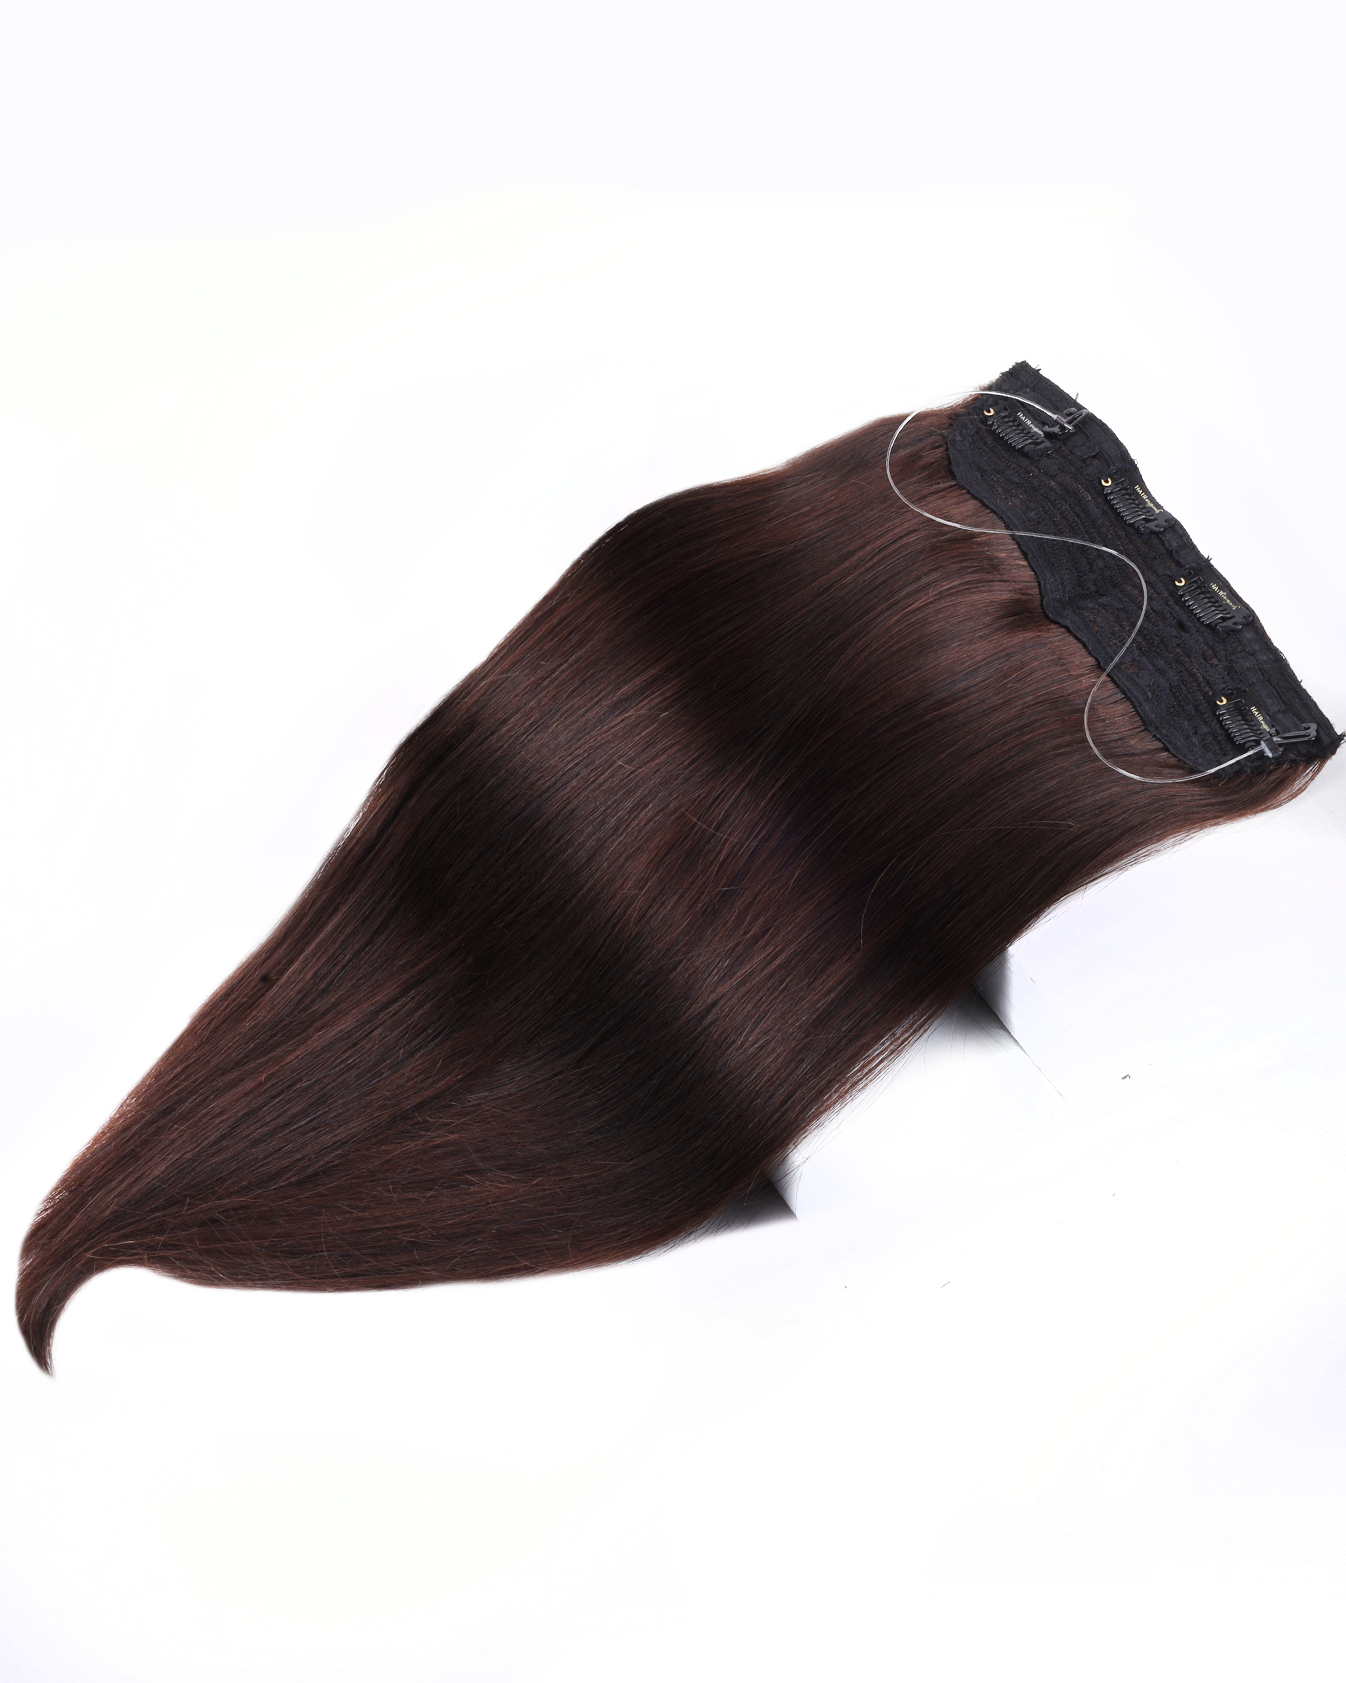 Halo Hair Extensions  HairOriginals Natural Brown Wavy 20 Inch